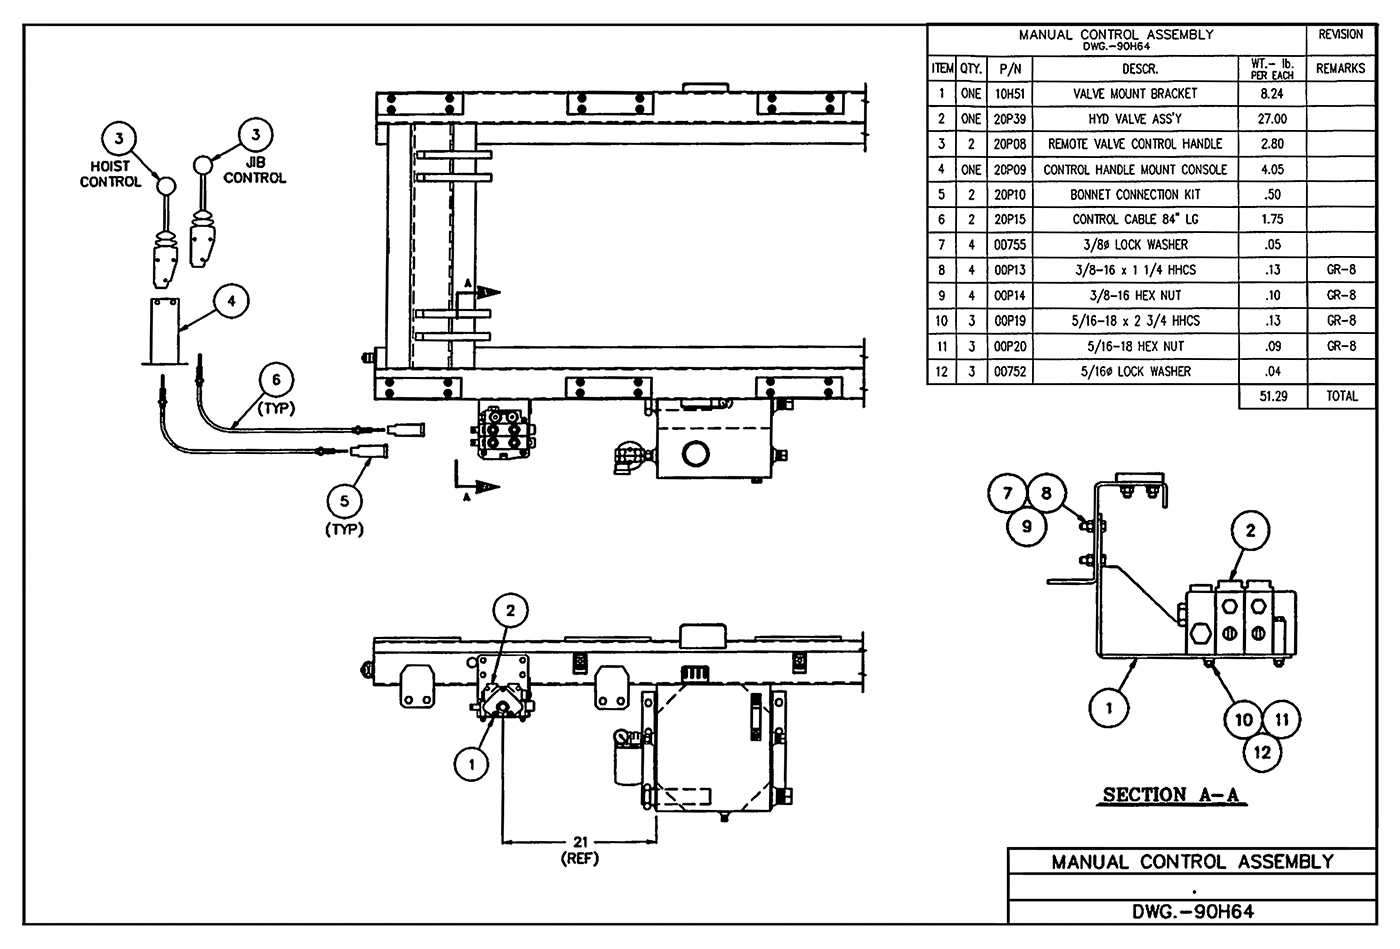 SL-225 Manual Control Assembly Diagram